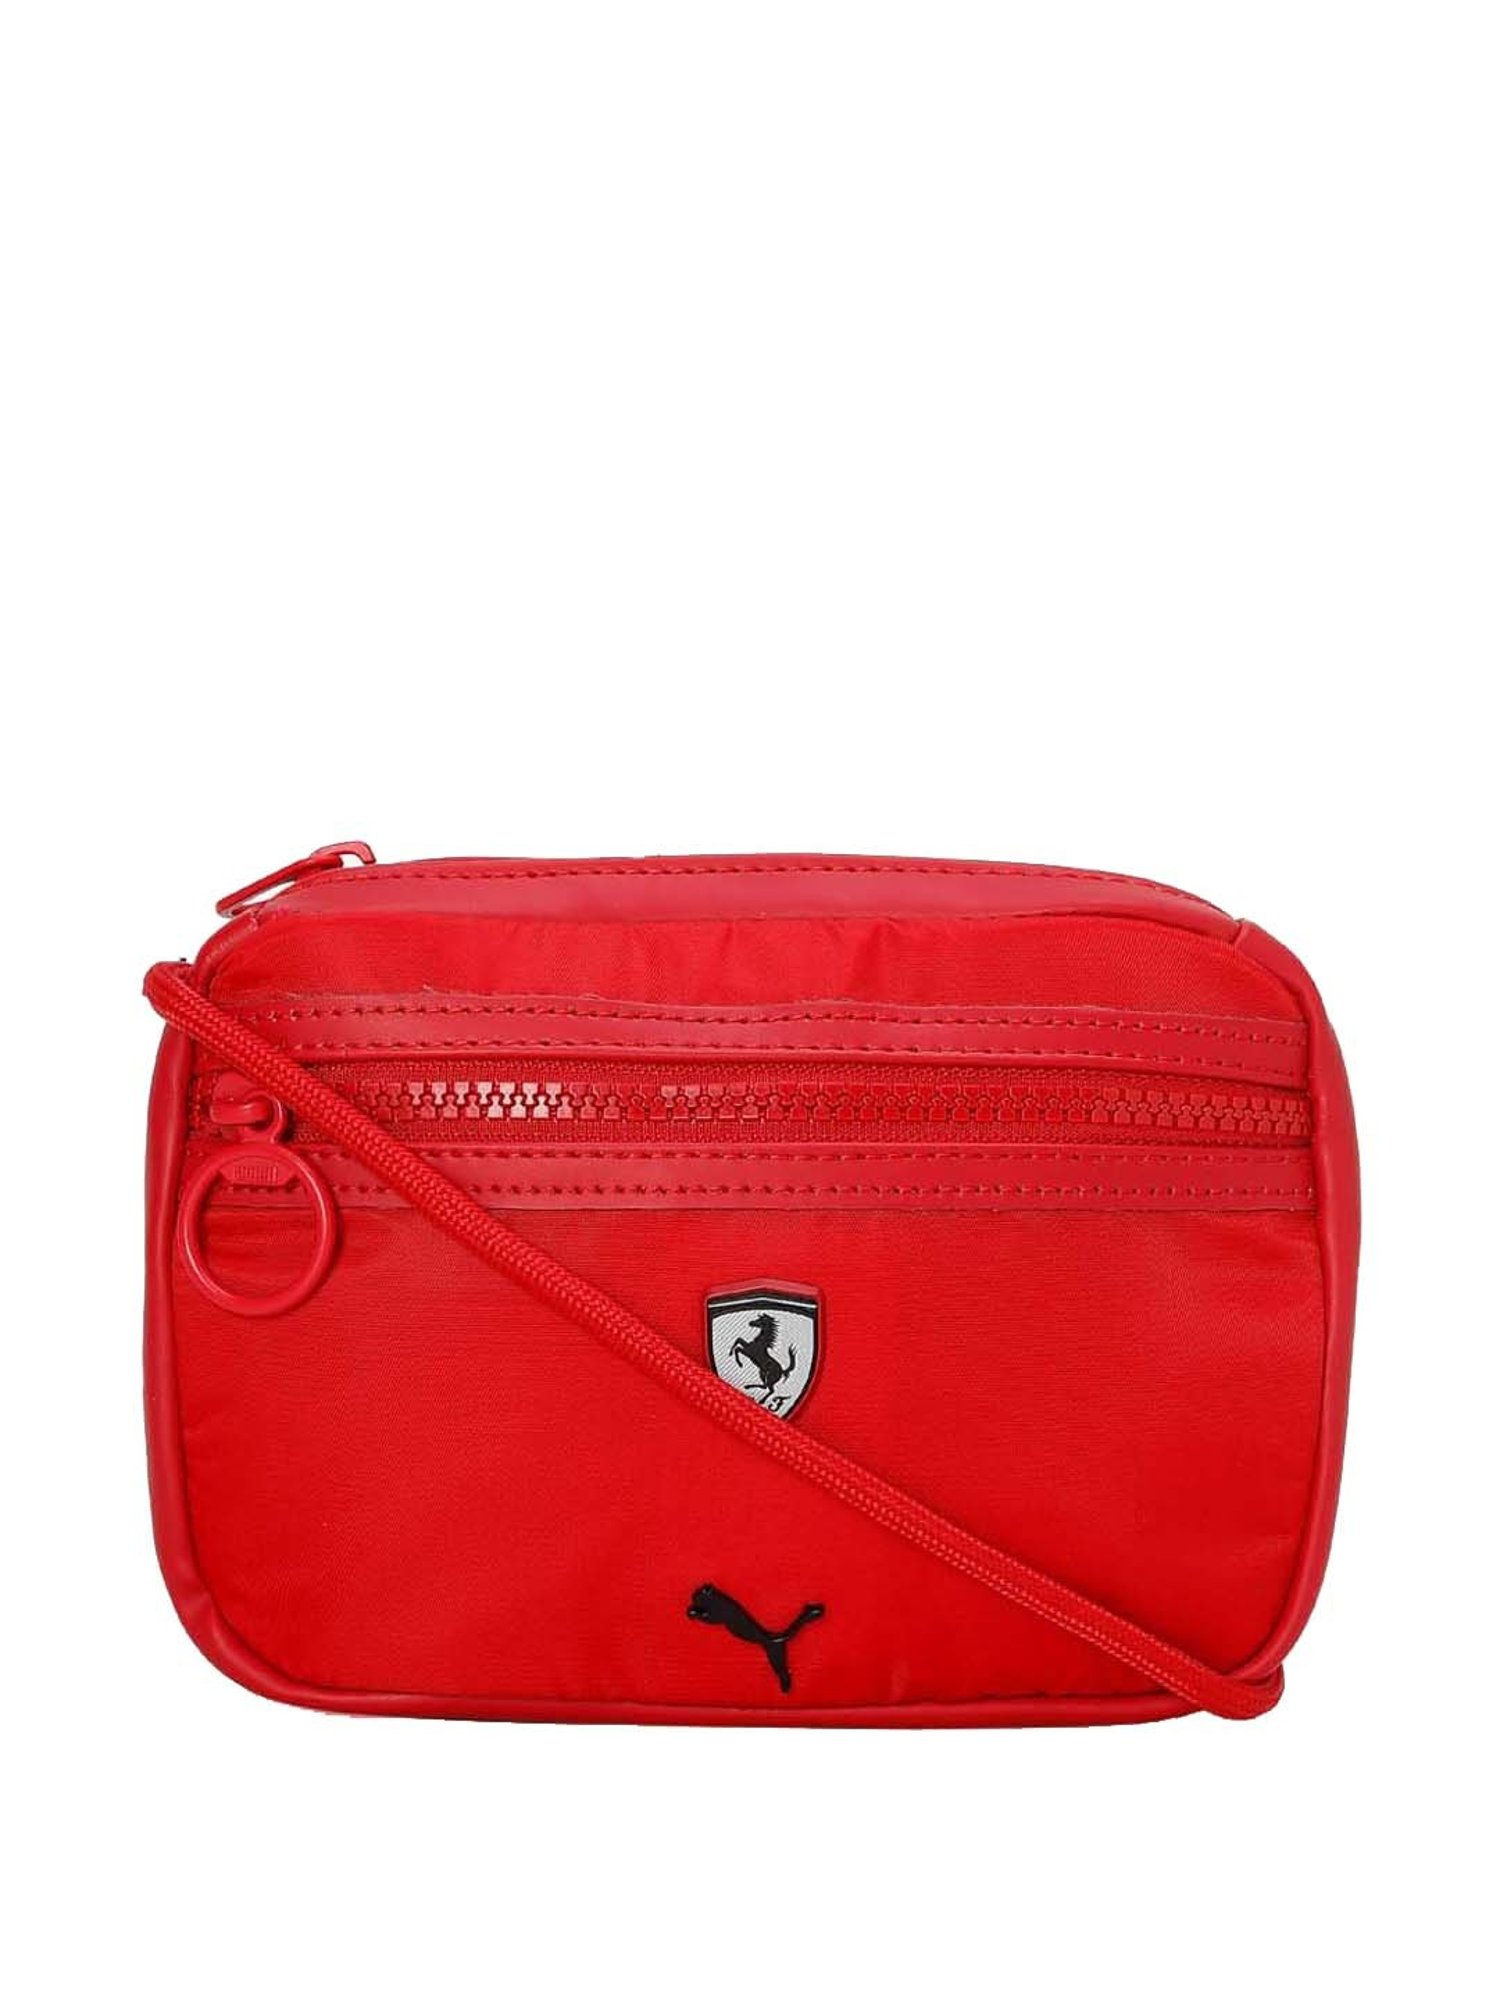 Red Ferrari bag |